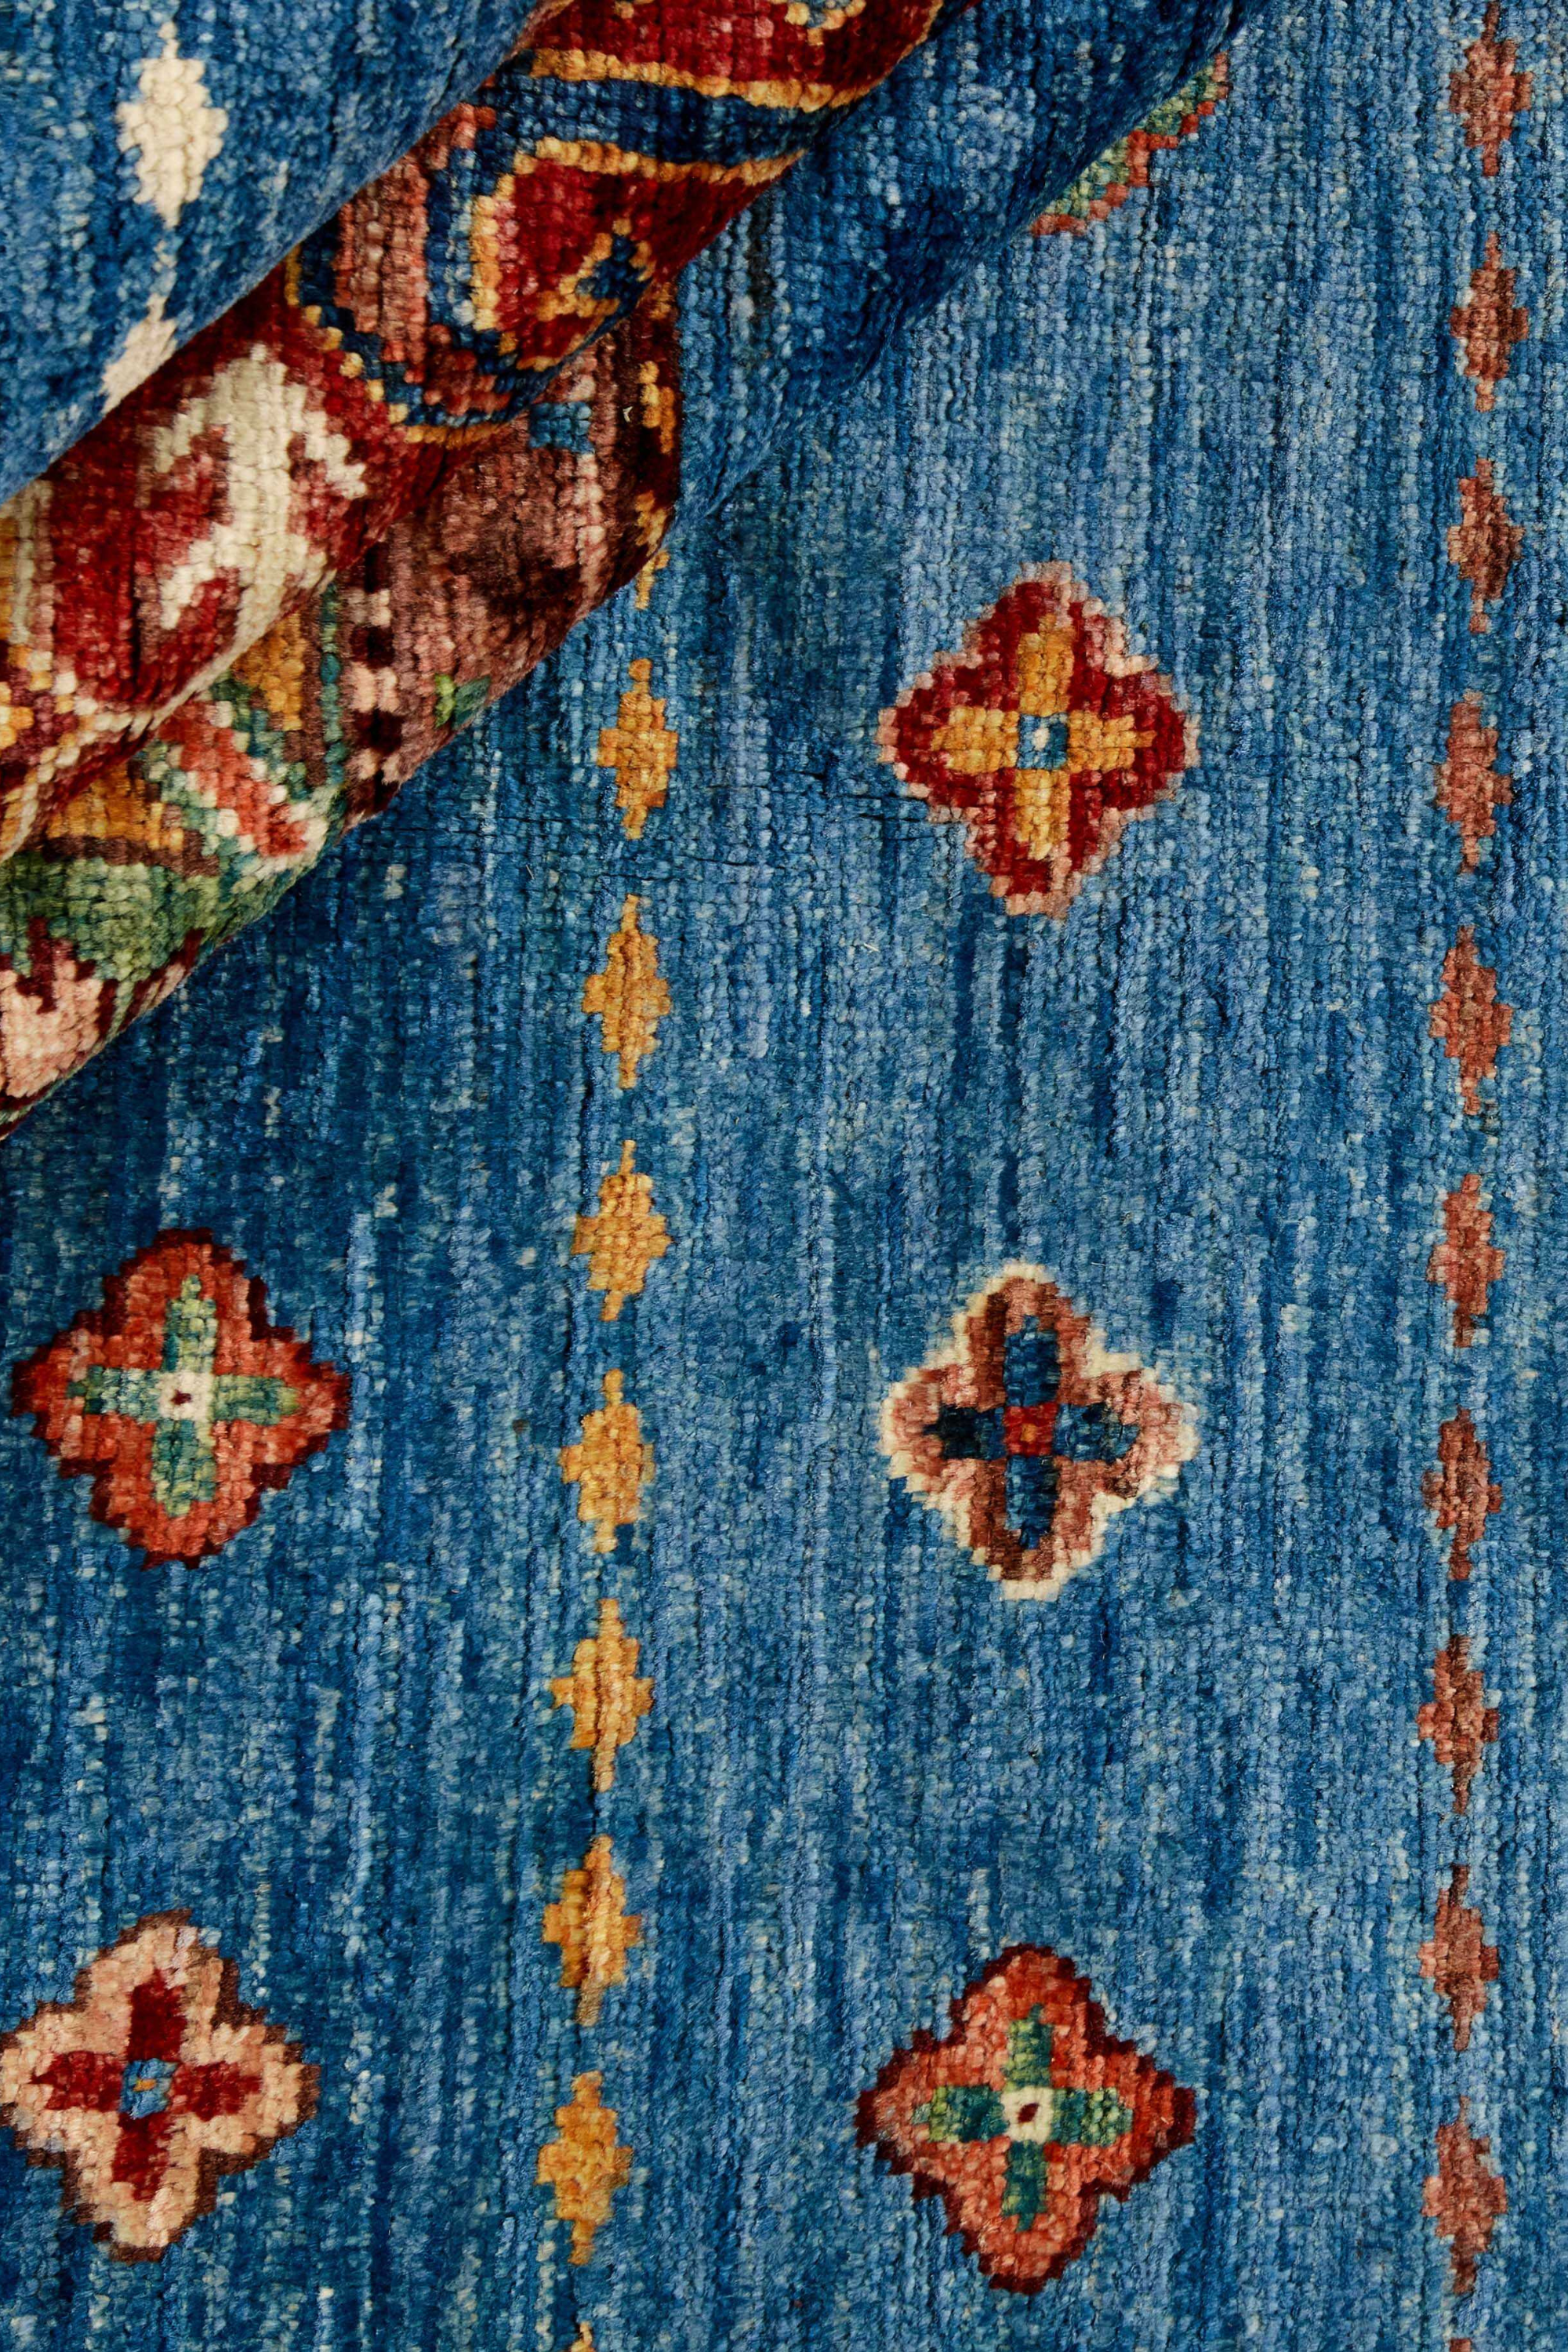 Traditional blue Shall rug